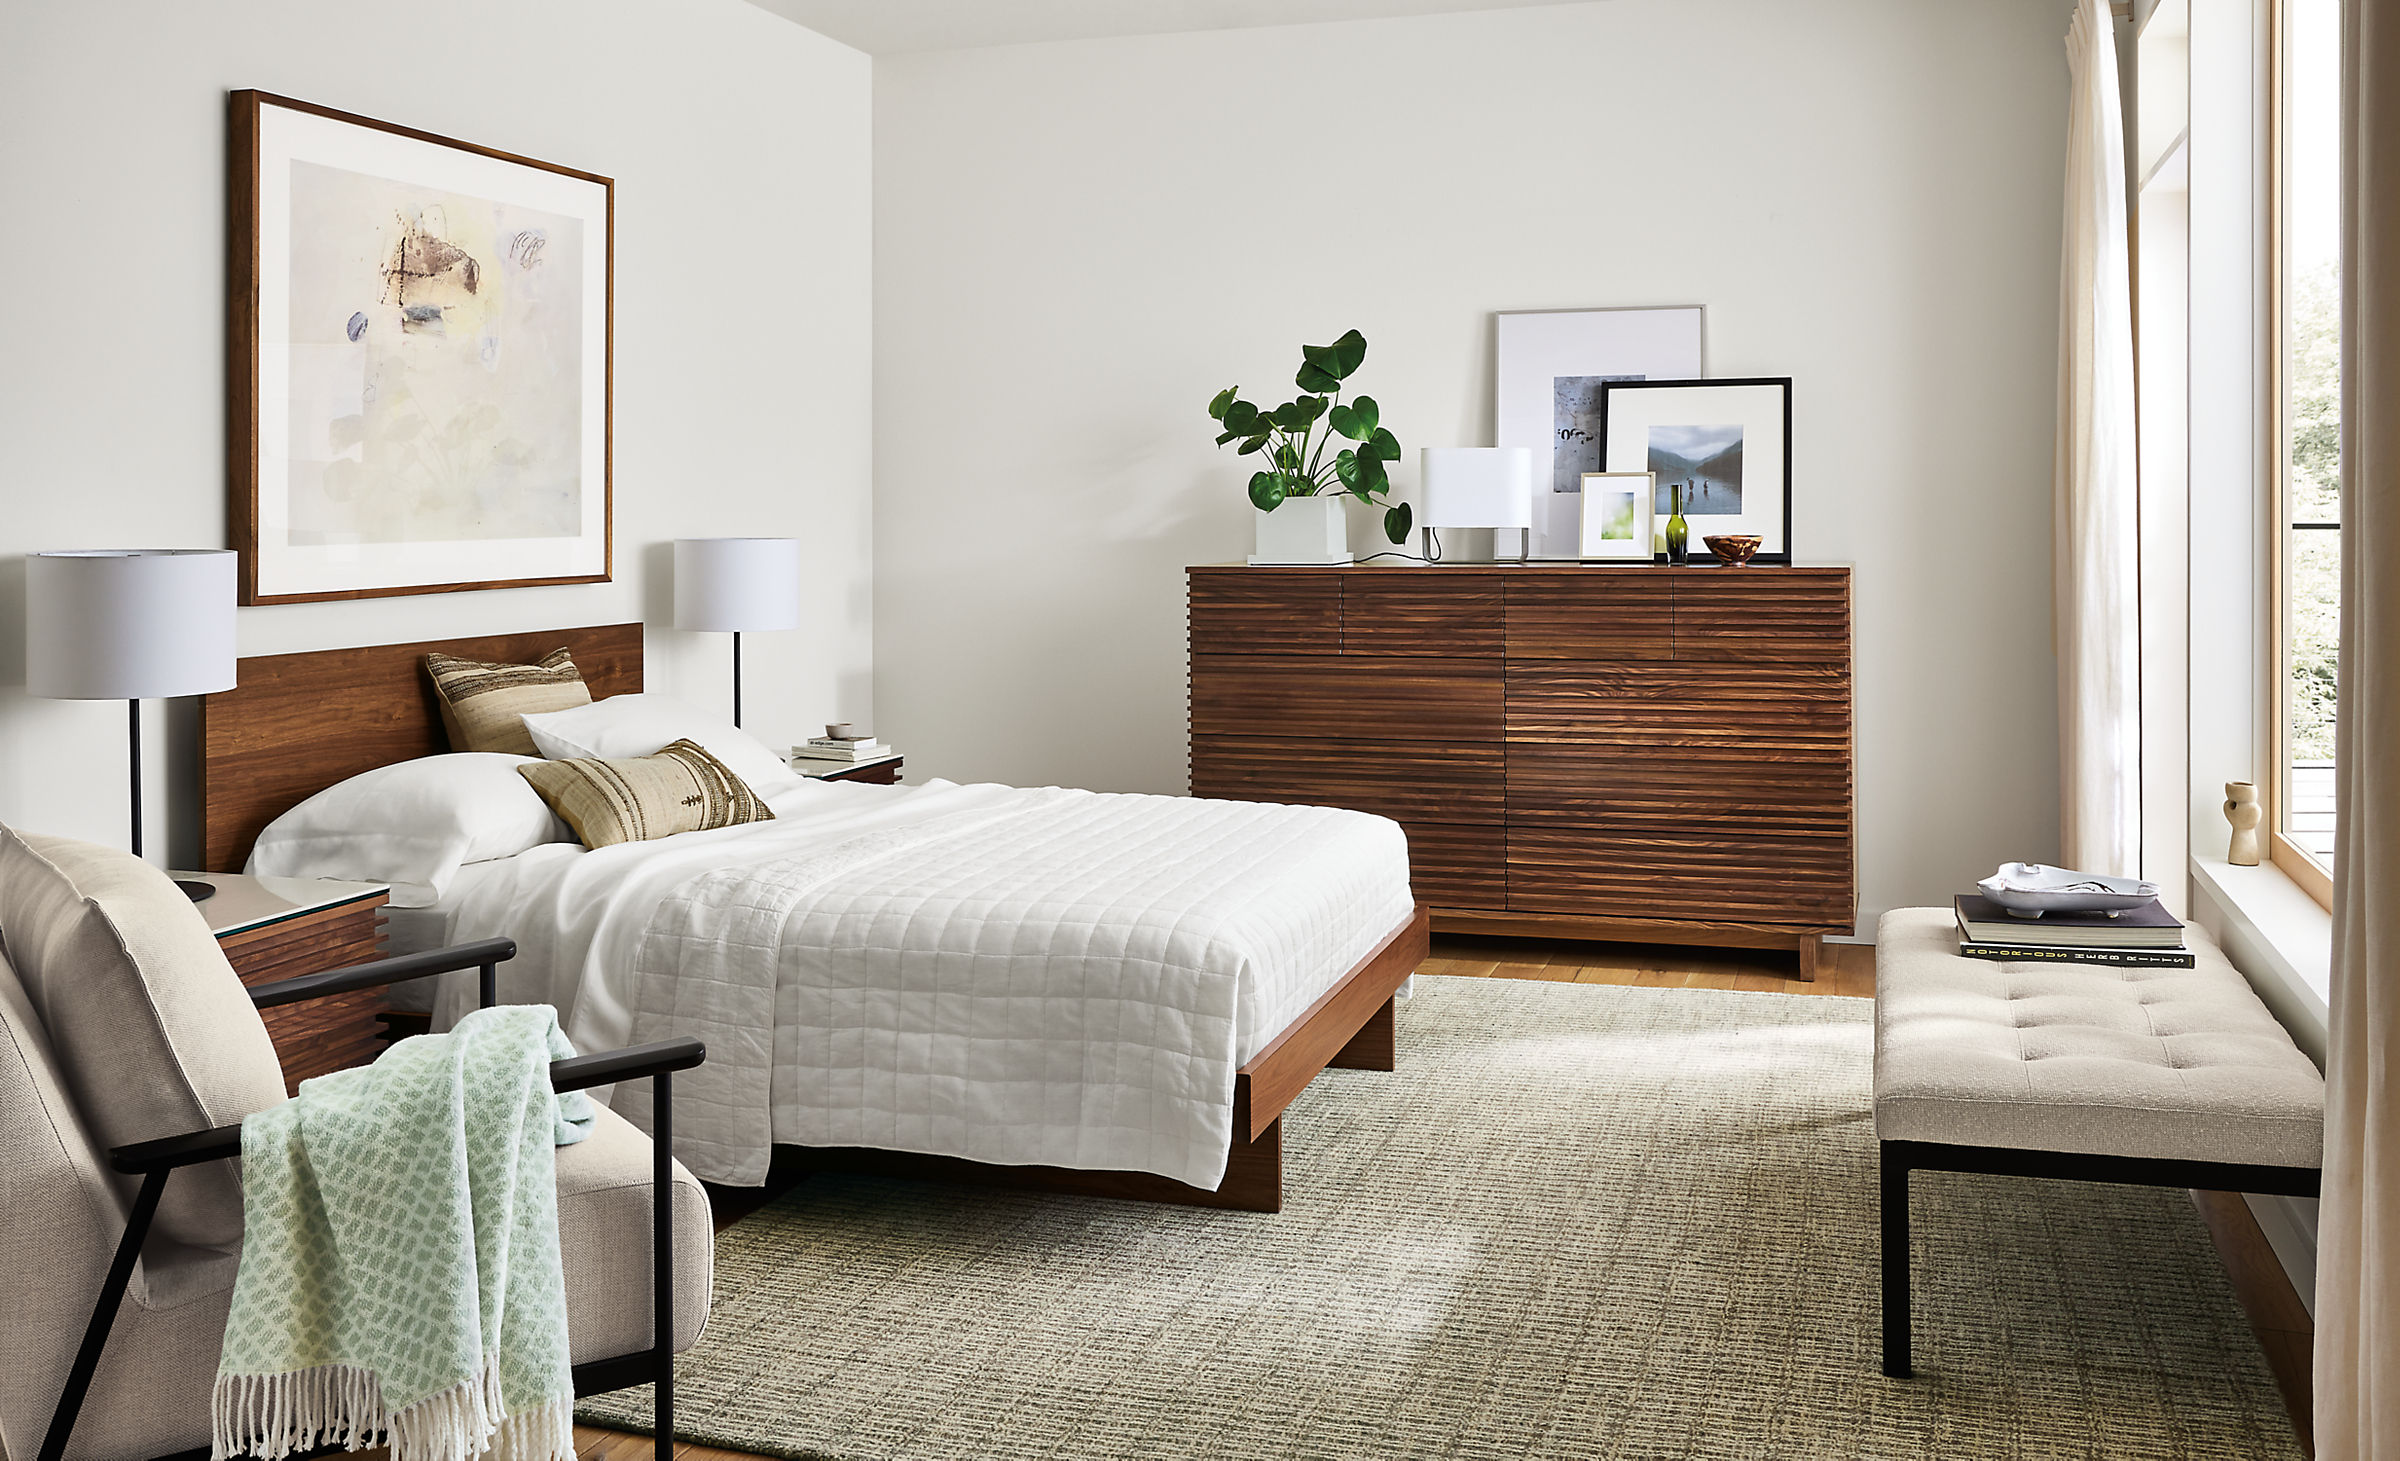 Bedroom with Anton queen bed in walnut and coles ten-drawer dresser in walnut with Nera rug in stone.